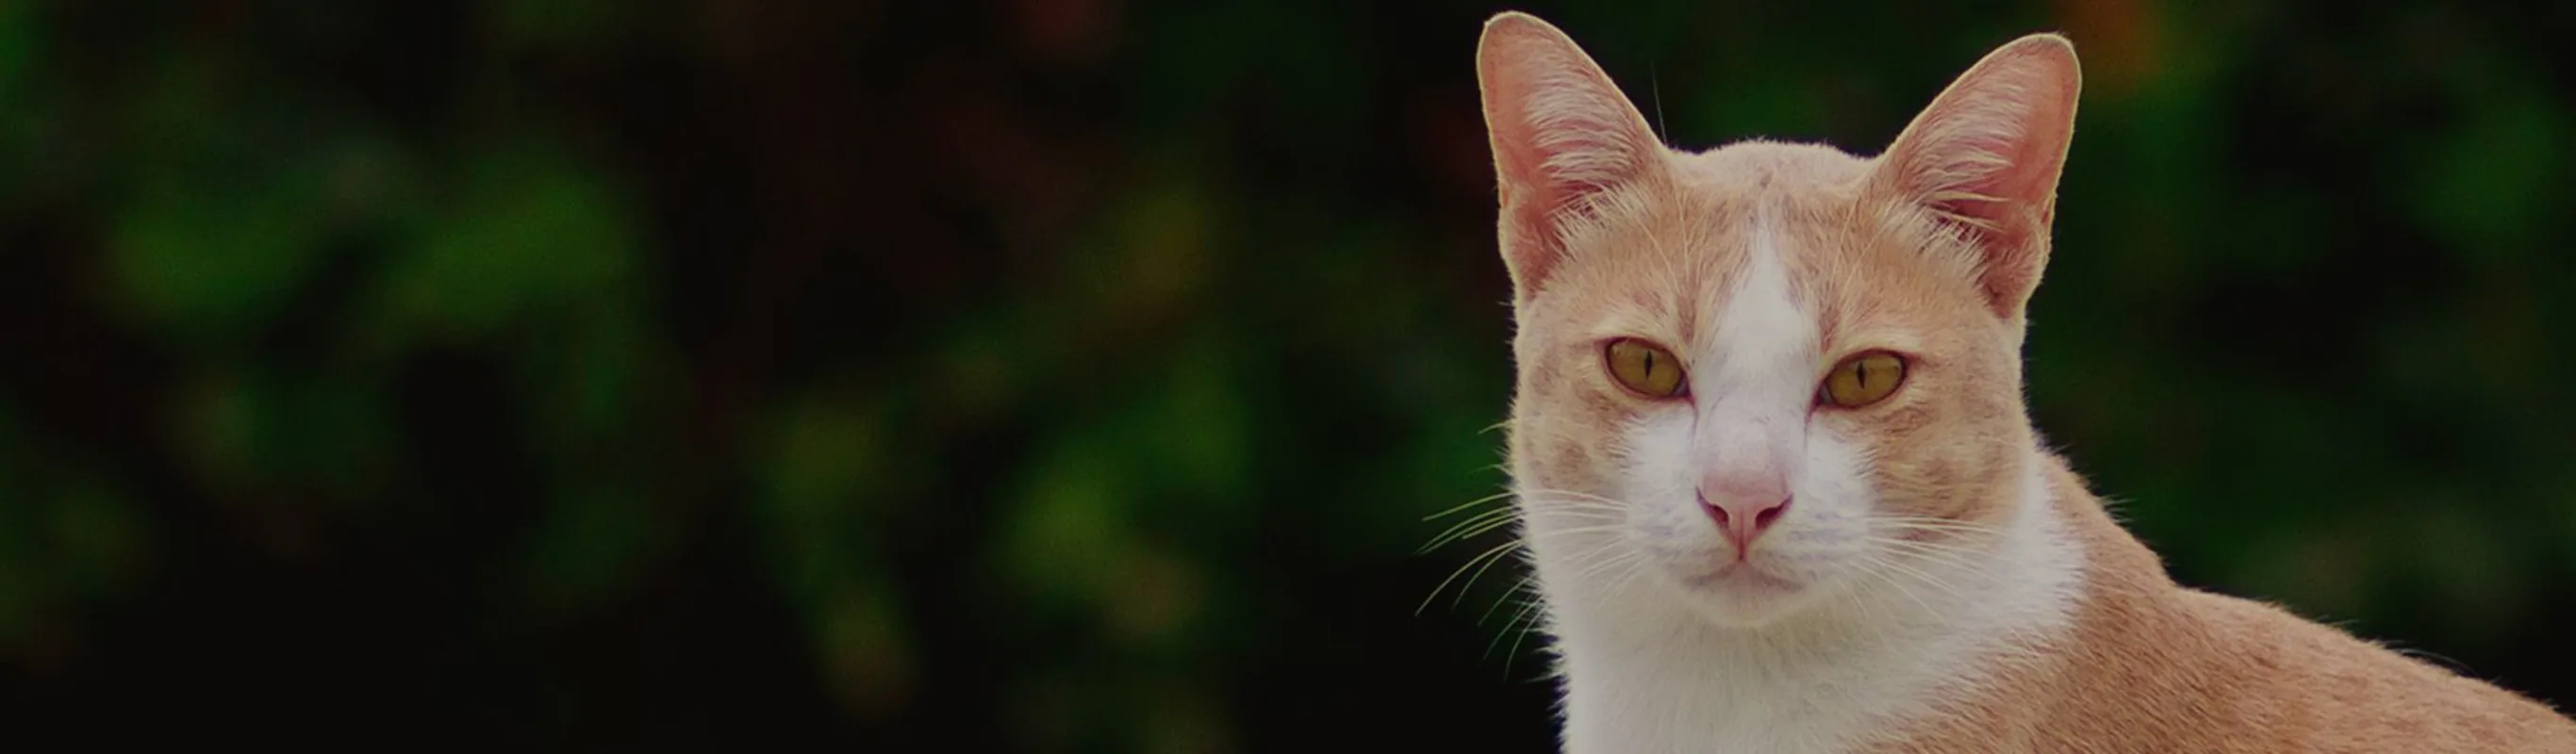 Close up of orange with white cat.